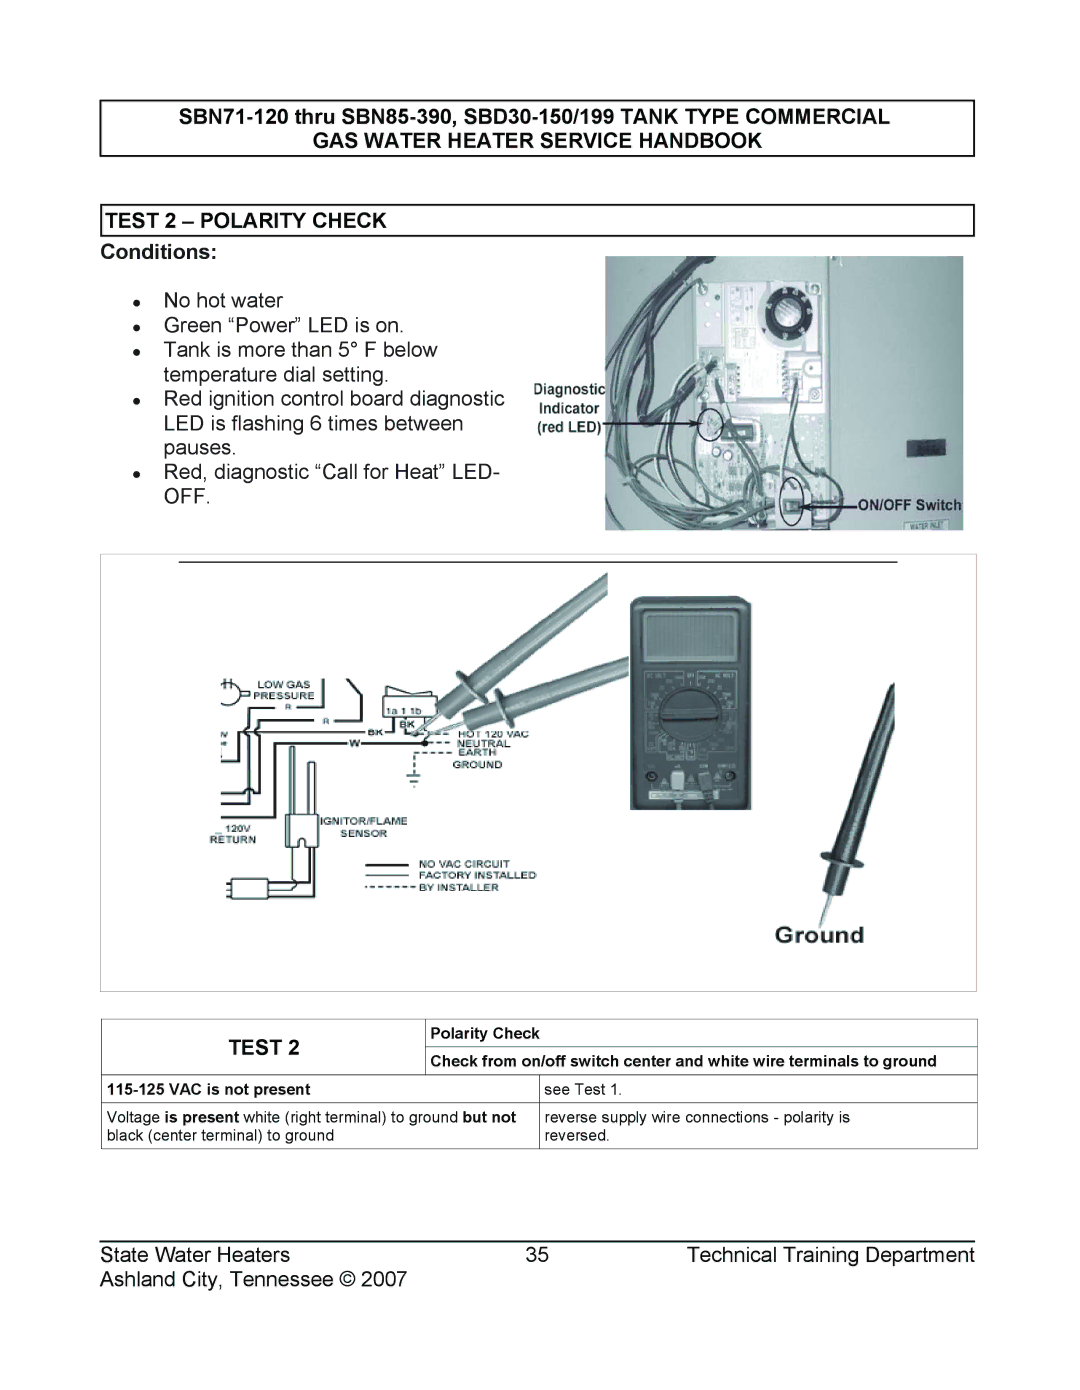 State Industries SBN85 390 (A), SBD30 150, SBN71 120, SBD30 199 manual GAS Water Heater Service Handbook Test 2 Polarity Check 